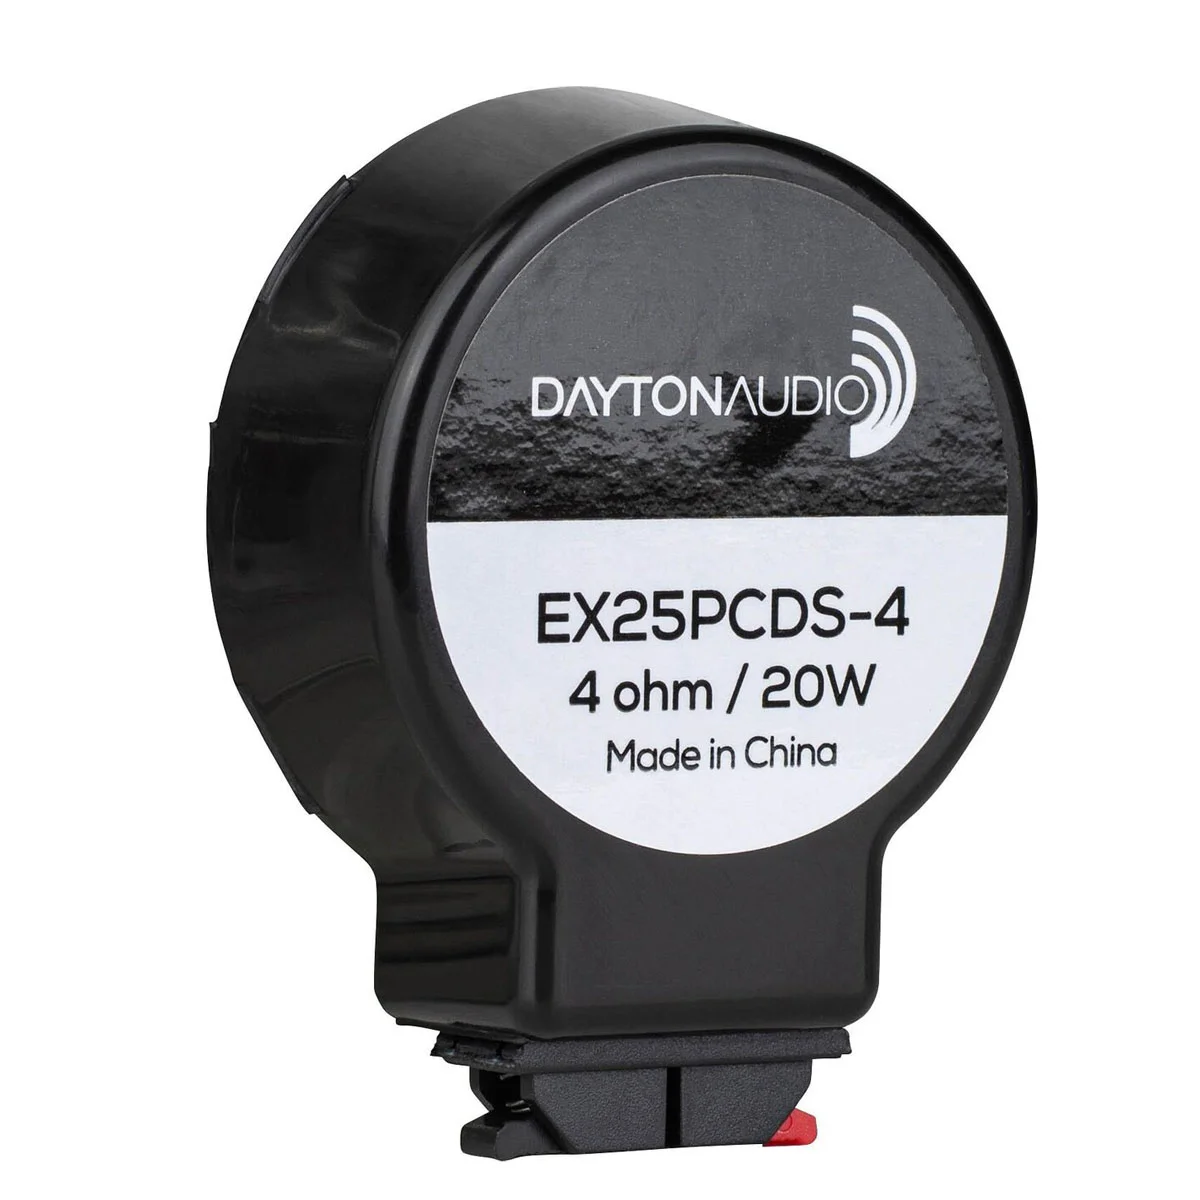 Driver Dayton Audio EX25PCDS-4